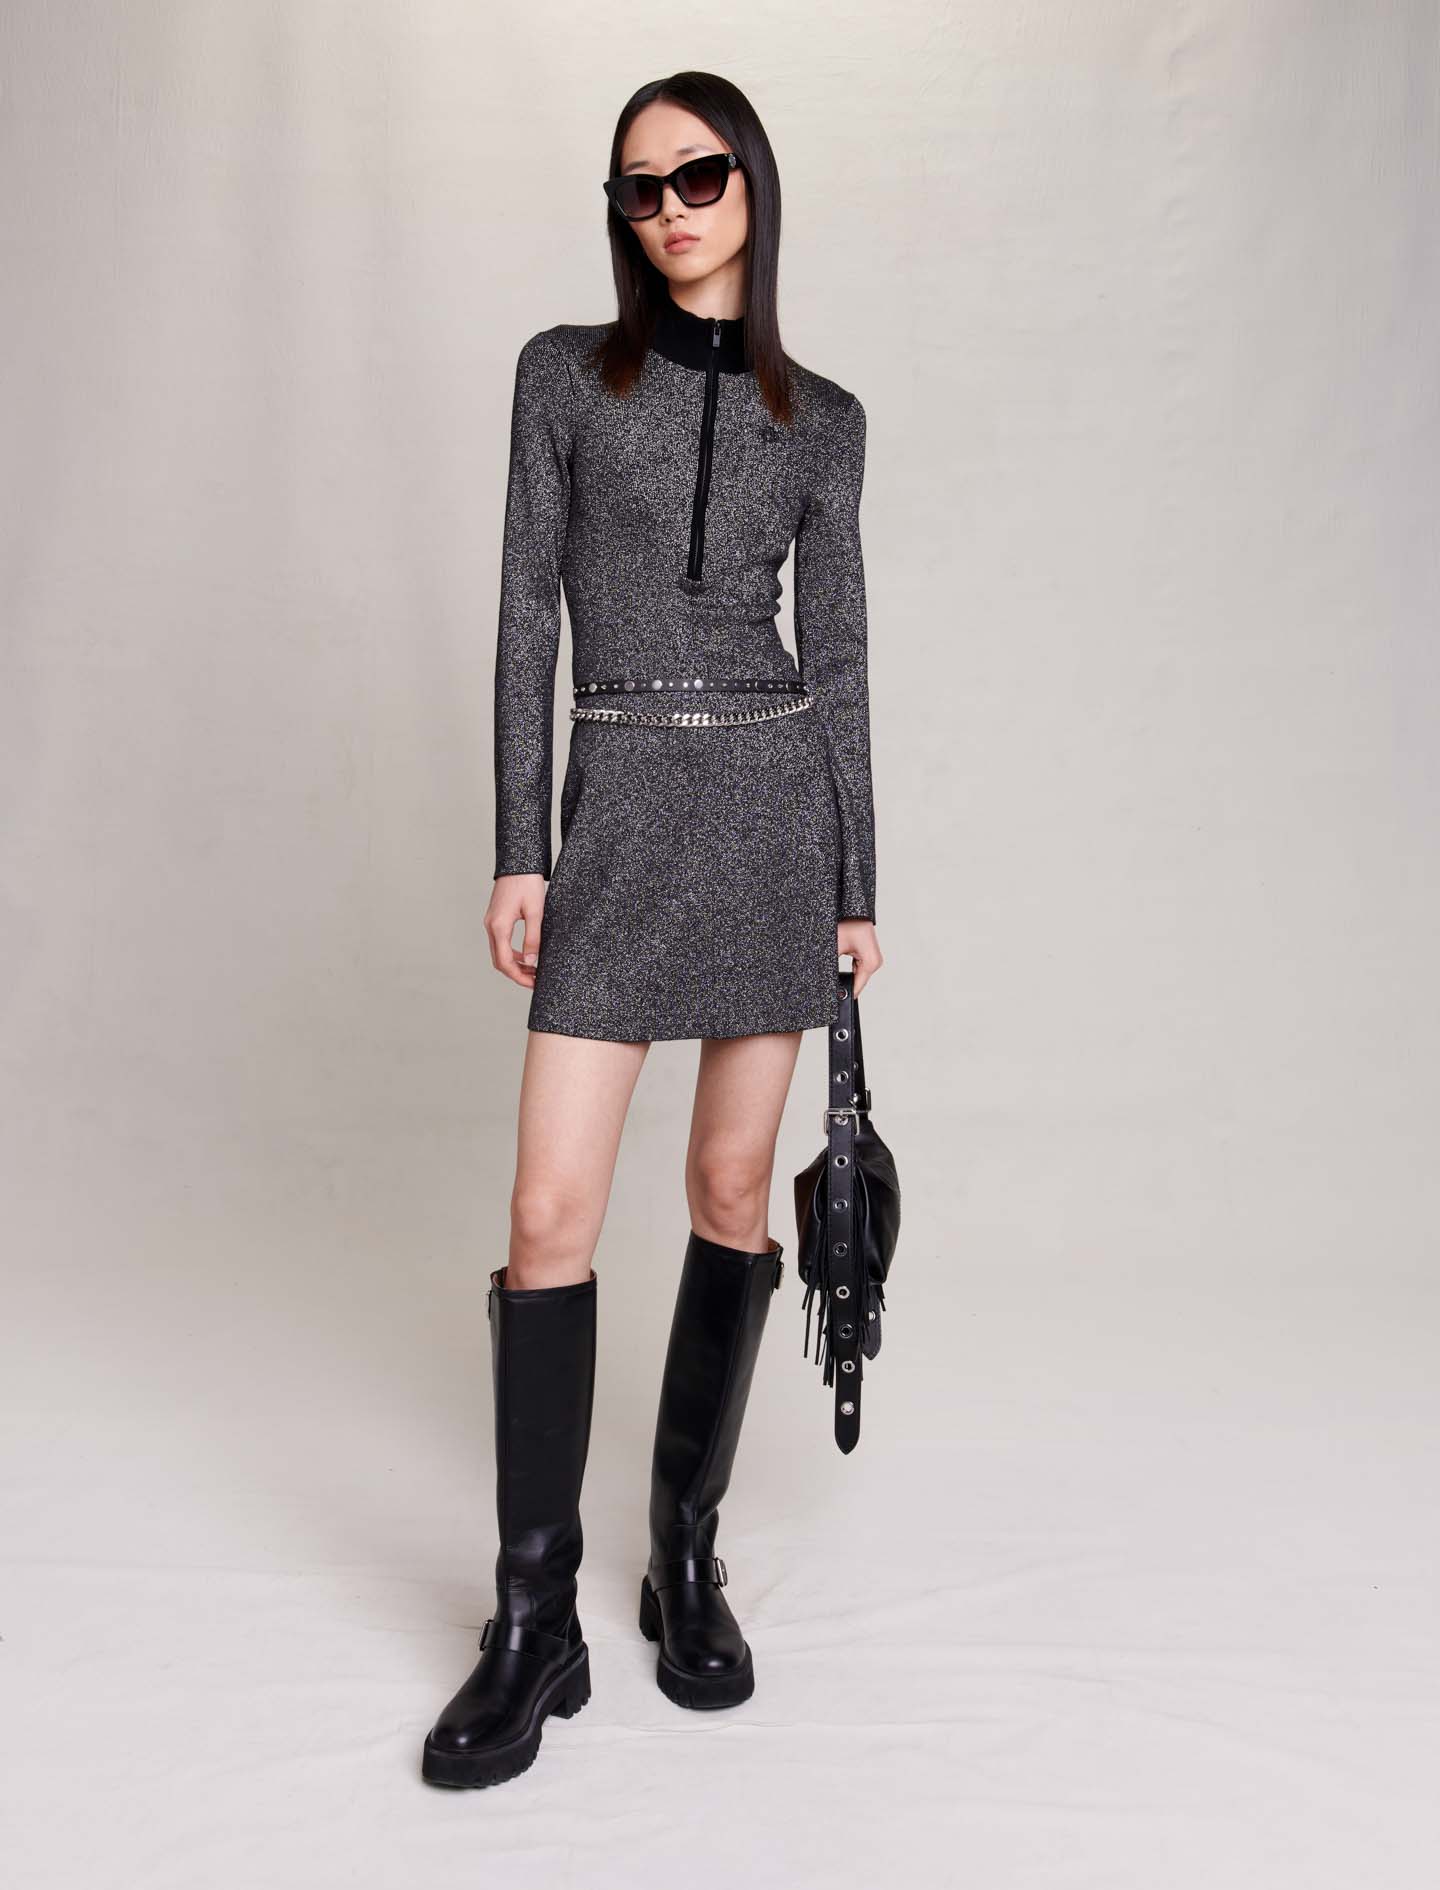 Maje Woman's viscose, Short glittery knit dress for Fall/Winter, in color Black/Glitter /